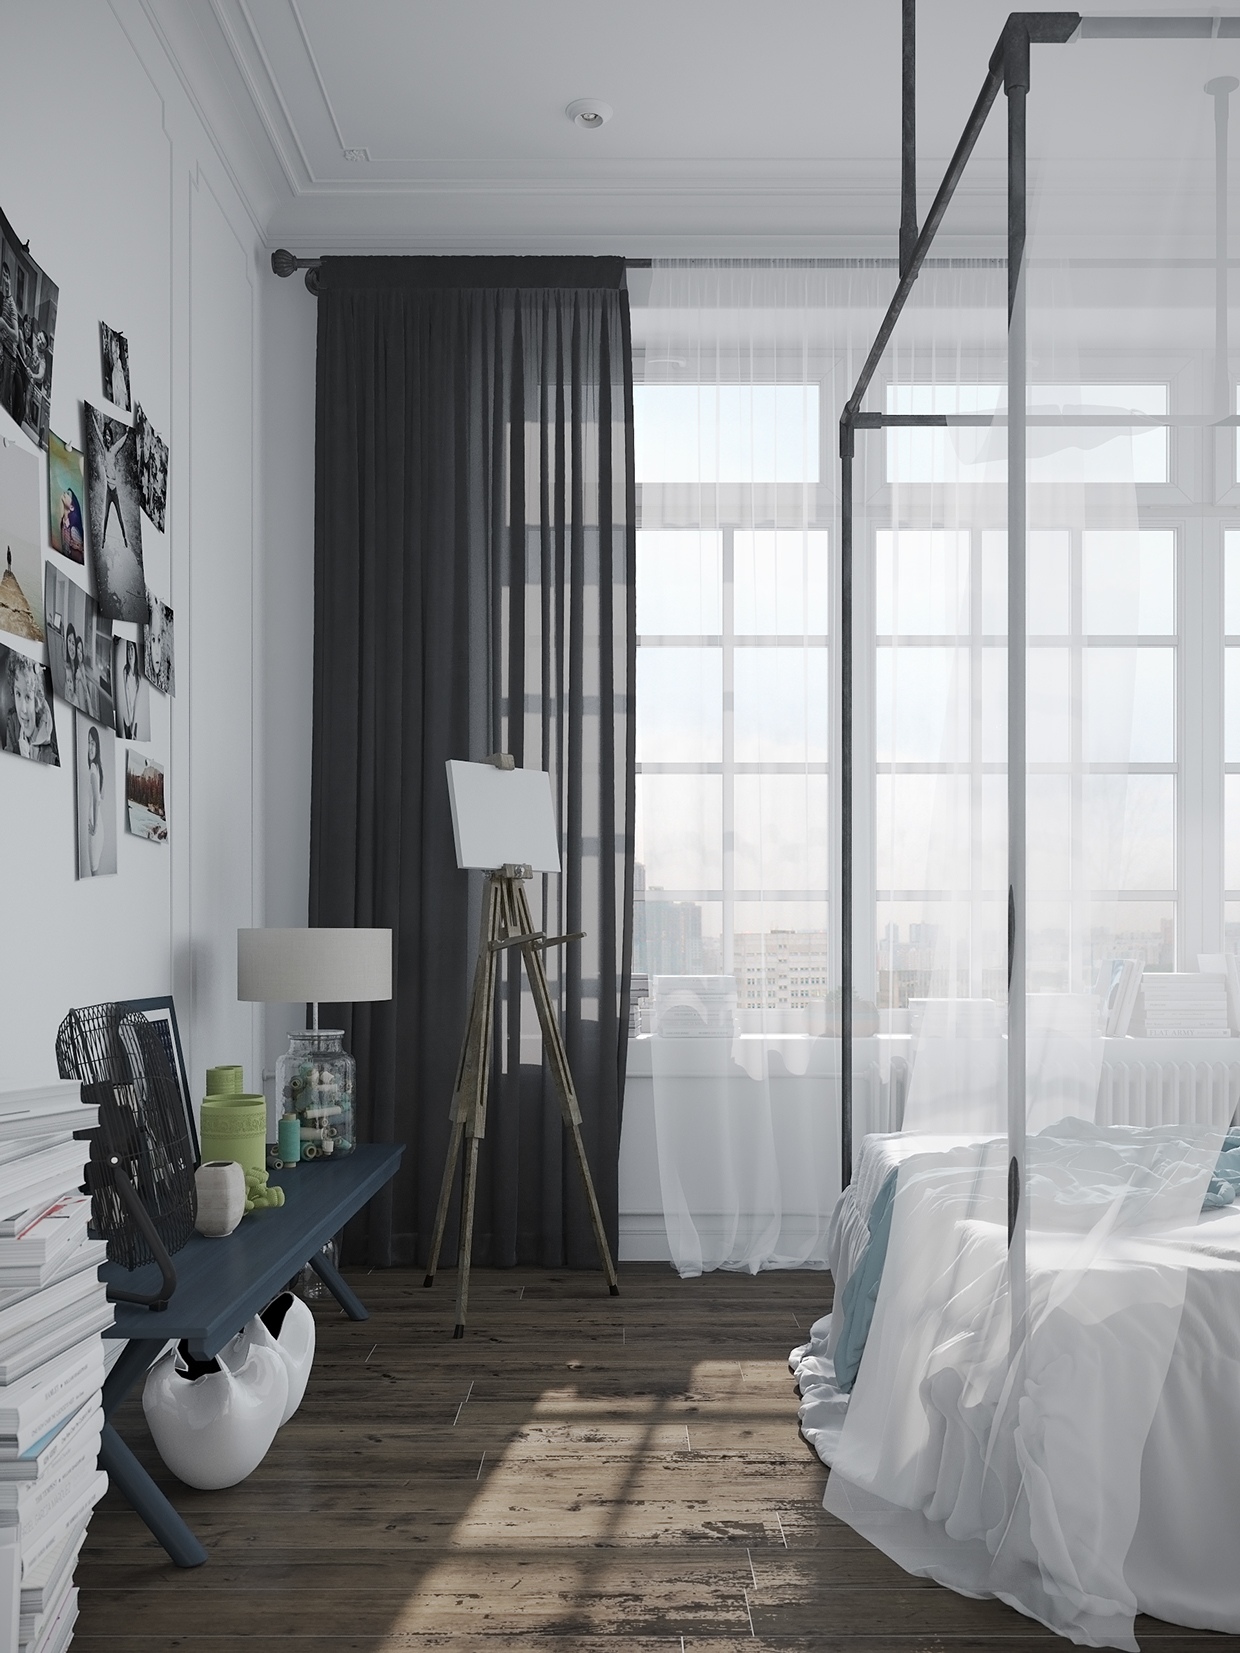 Scandinavian decor "width =" 1240 "height =" 1653 "srcset =" https://mileray.com/wp-content/uploads/2020/05/1588511575_645_Scandinavian-Bedroom-Design-With-Beautiful-Accents-That-Perfect-For-Relaxation.jpg 1240w, https://mileray.com/wp -content / uploads / 2016/04 / modern-bedroom-225x300.jpg 225w, https://mileray.com/wp-content/uploads/2016/04/modern-bedroom-768x1024.jpg 768w, https: // myfashionos .com / wp-content / uploads / 2016/04 / modern-bedroom-696x928.jpg 696w, https://mileray.com/wp-content/uploads/2016/04/modern-bedroom-1068x1424.jpg 1068w, https : //mileray.com/wp-content/uploads/2016/04/modern-bedroom-315x420.jpg 315w "sizes =" (maximum width: 1240px) 100vw, 1240px